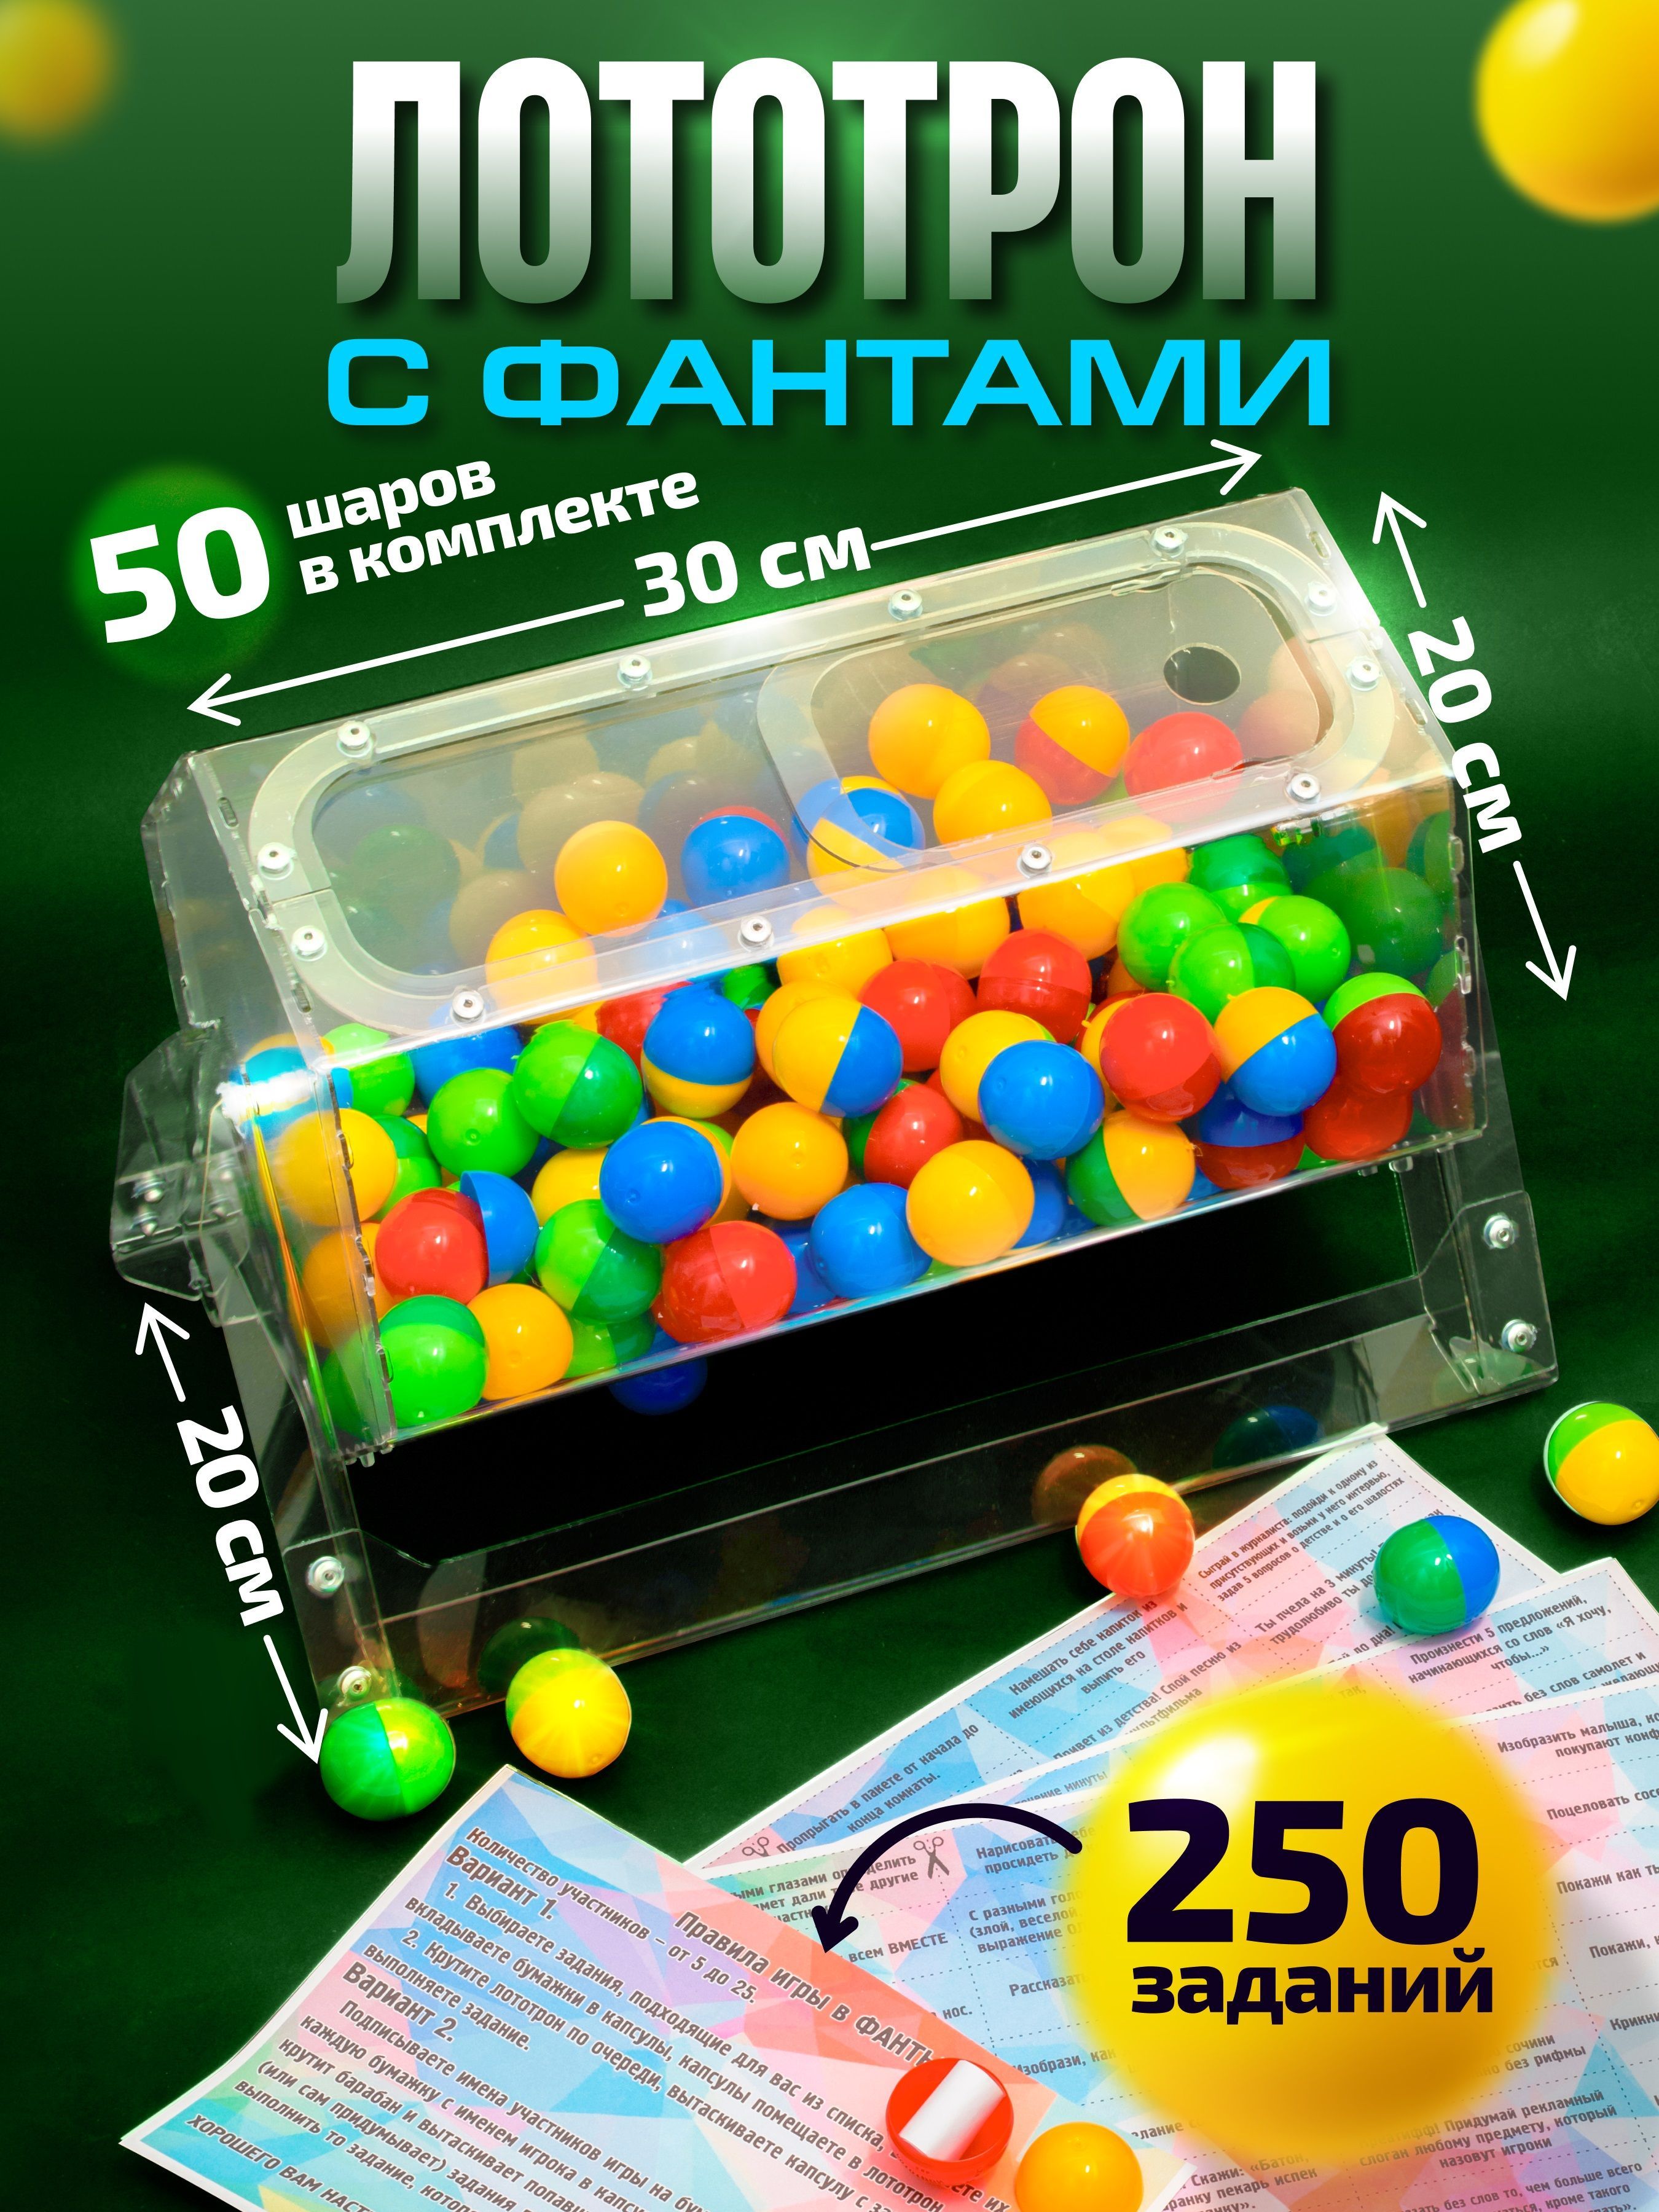 Лототрон 5,5 литров | Барабан для лотереи